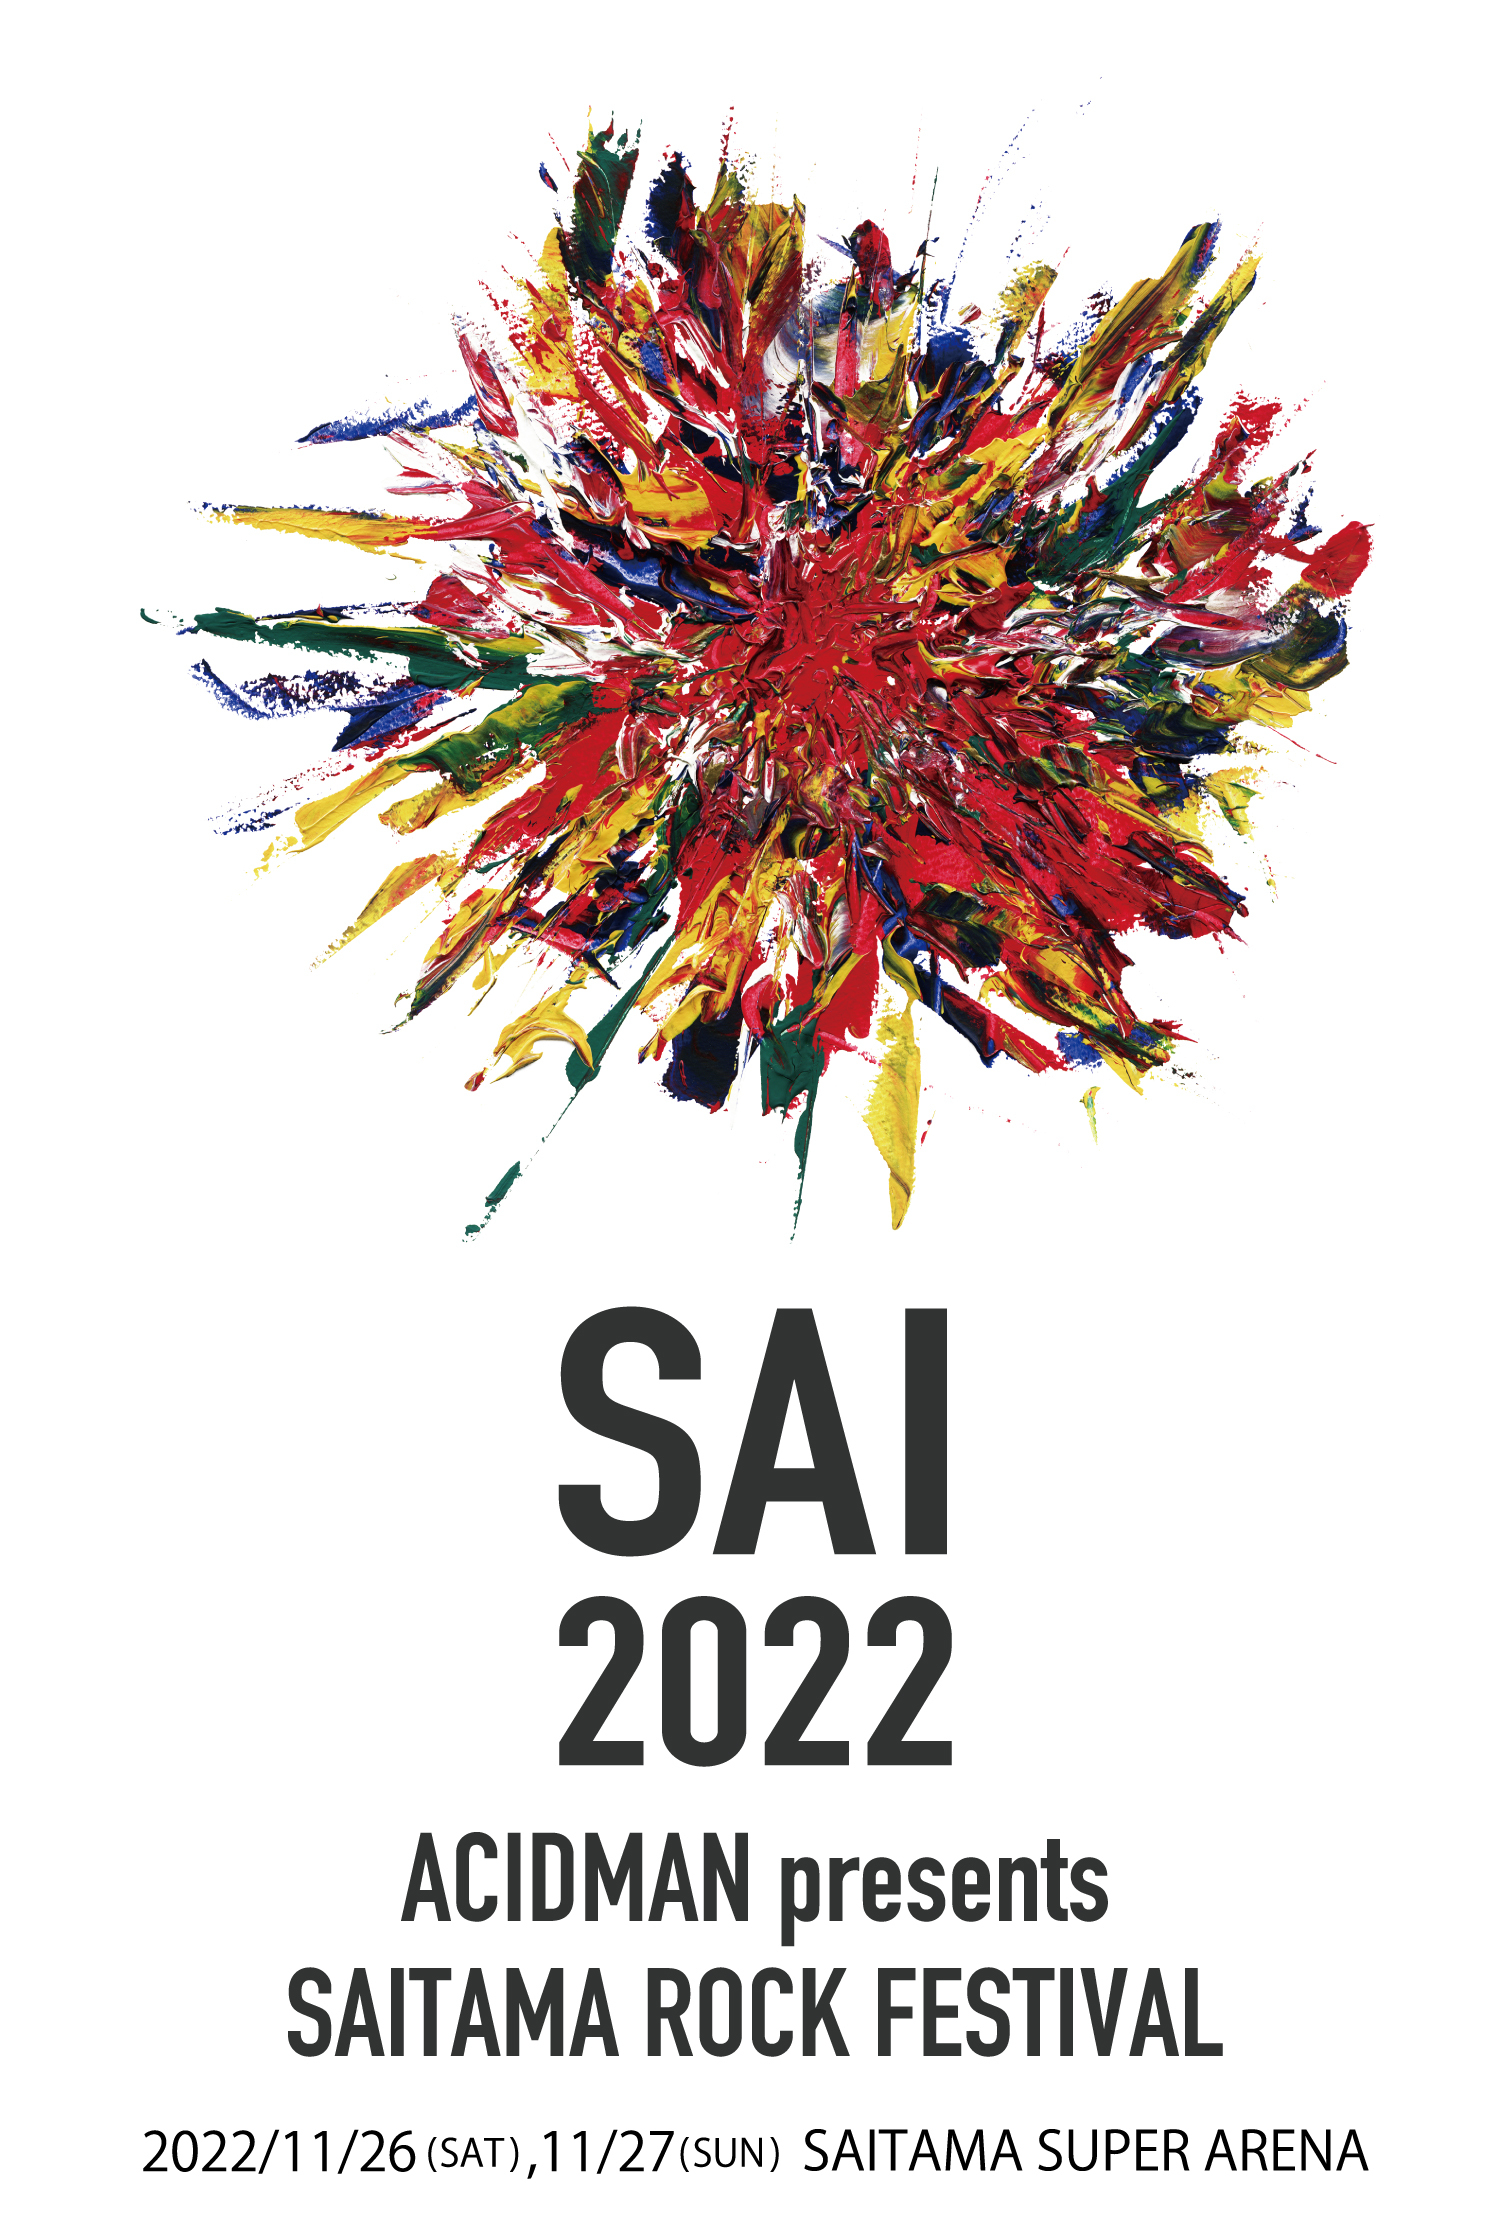 ACIDMAN presents「SAITAMA ROCK FESTIVAL “SAI” 2022」